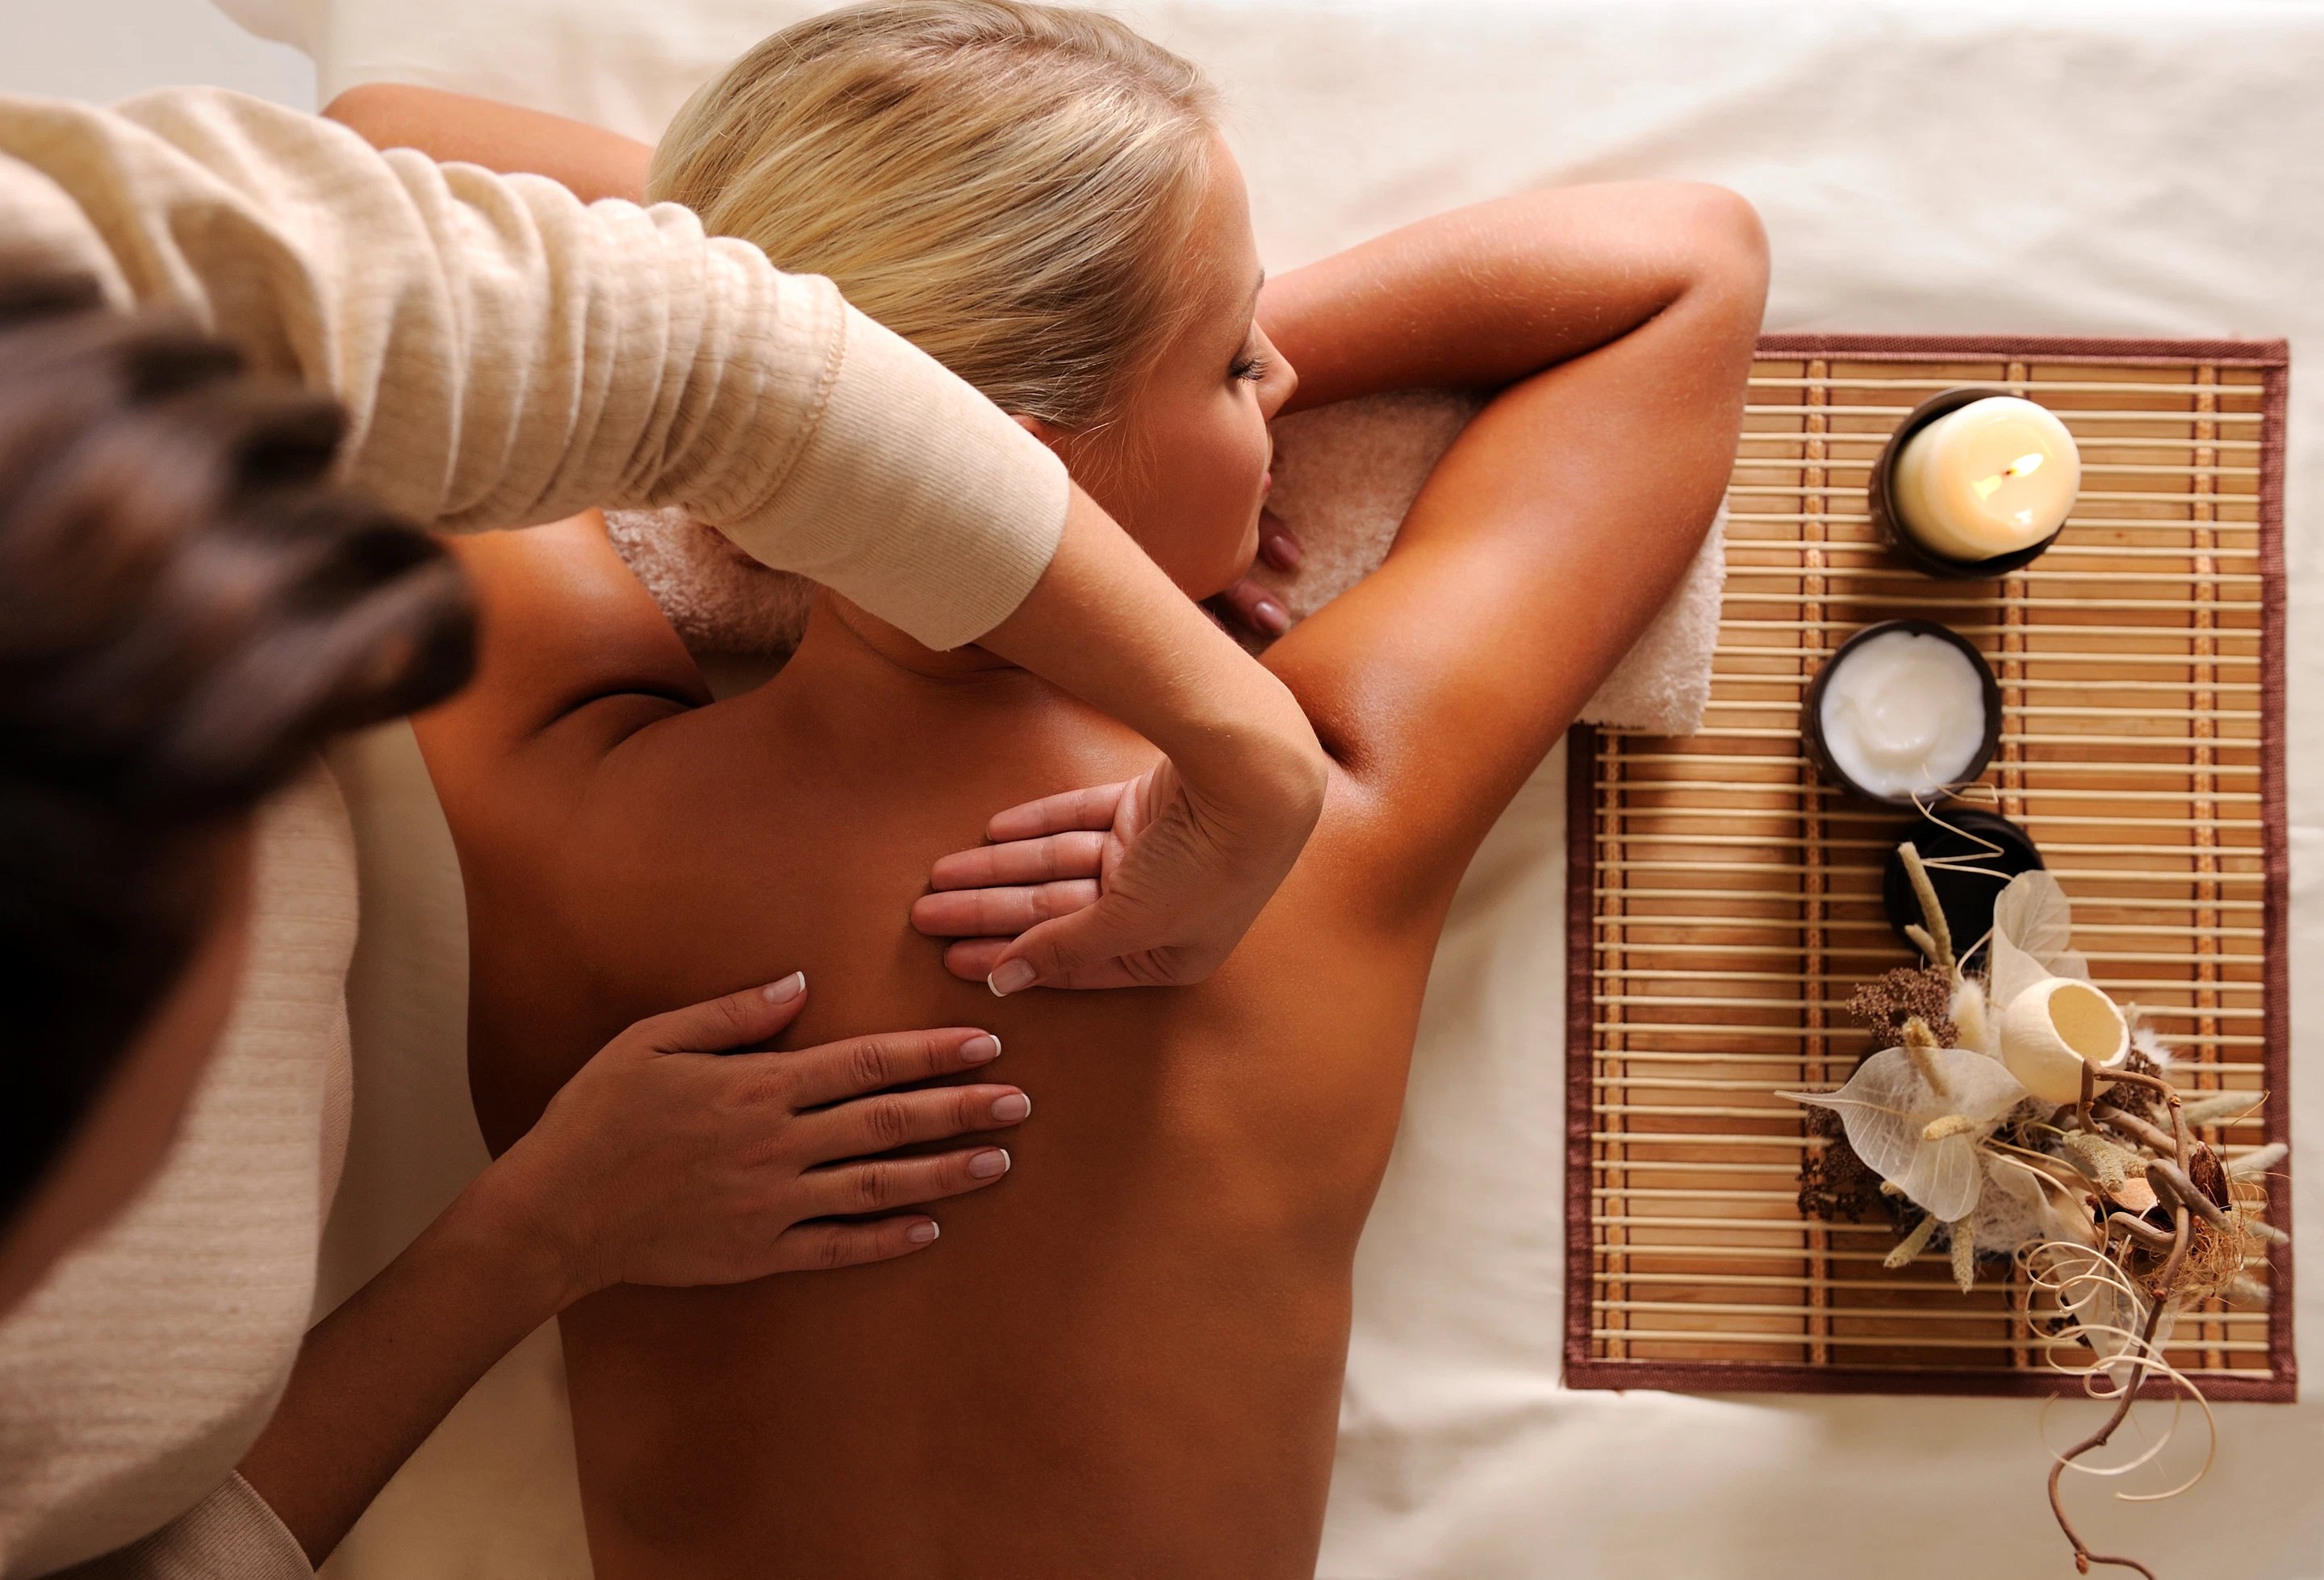 438/female-getting-relaxation-massage-beauty-salon-high-angle-view.jpg